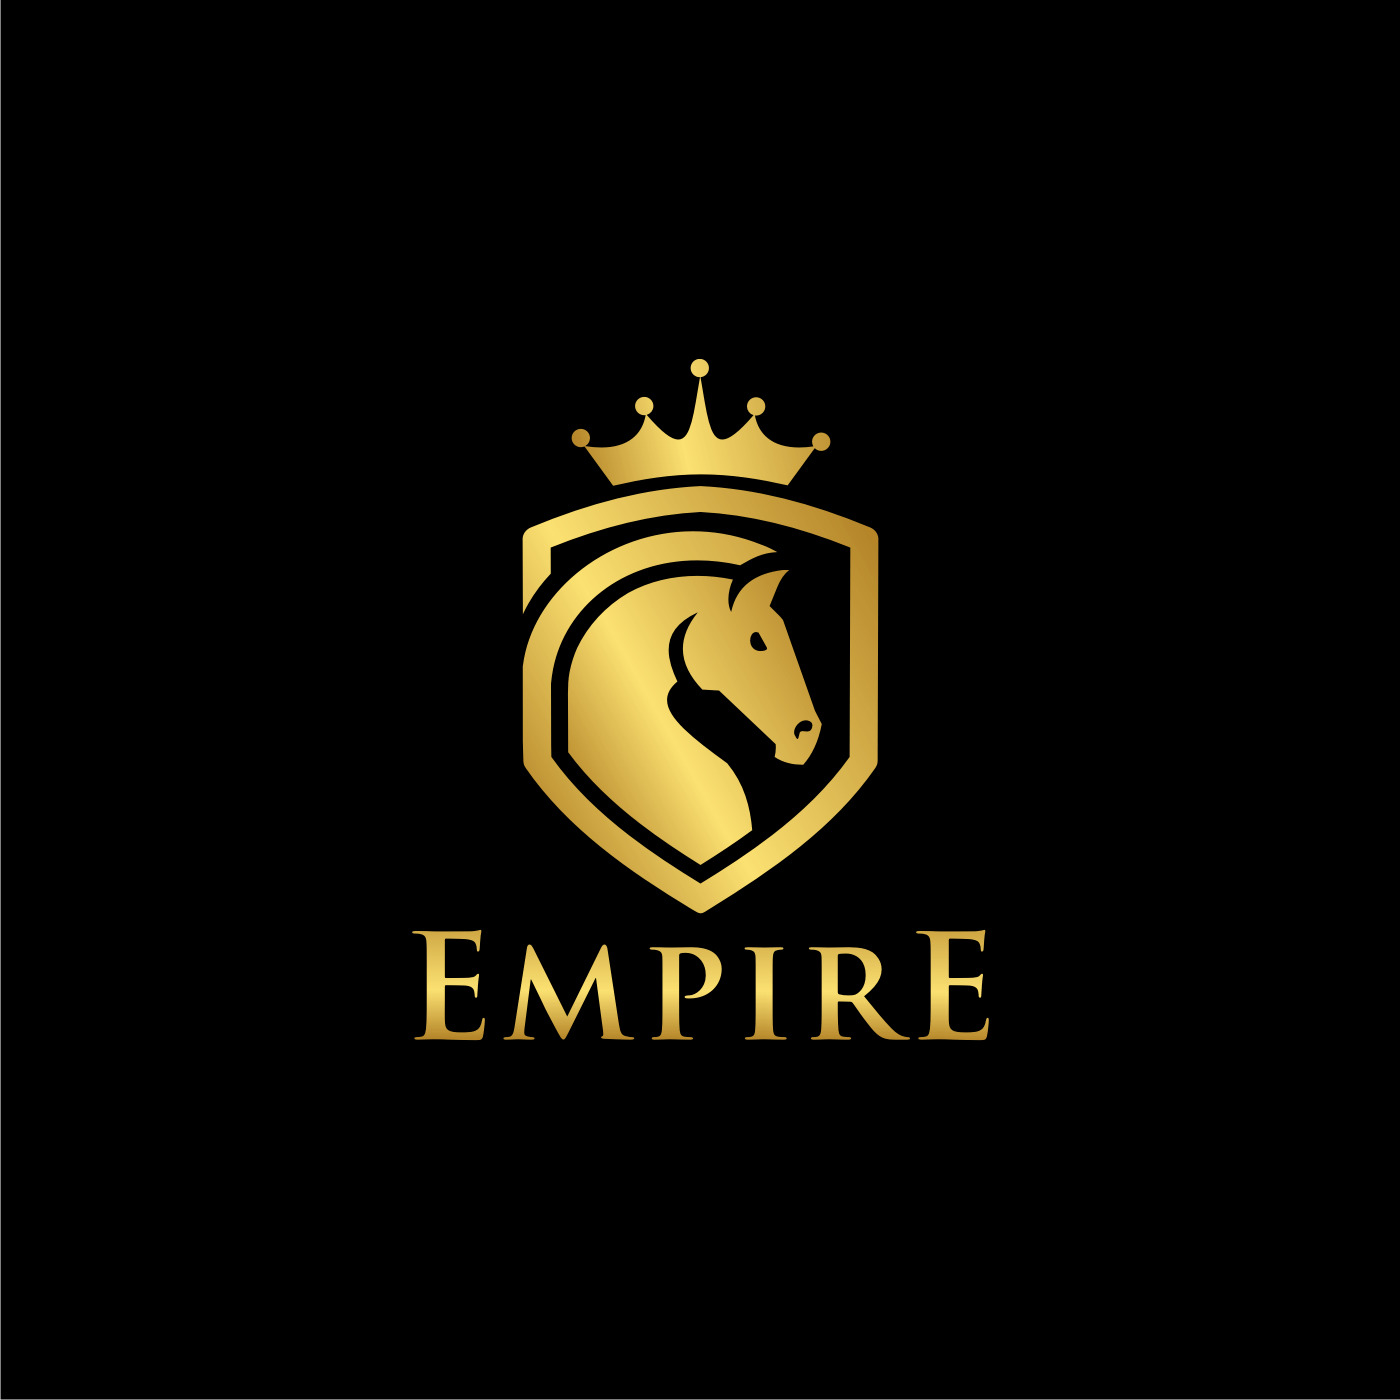 Empire Logo - Design #228 by kupukupu_design | EMPIRE needs emblem style logo with ...